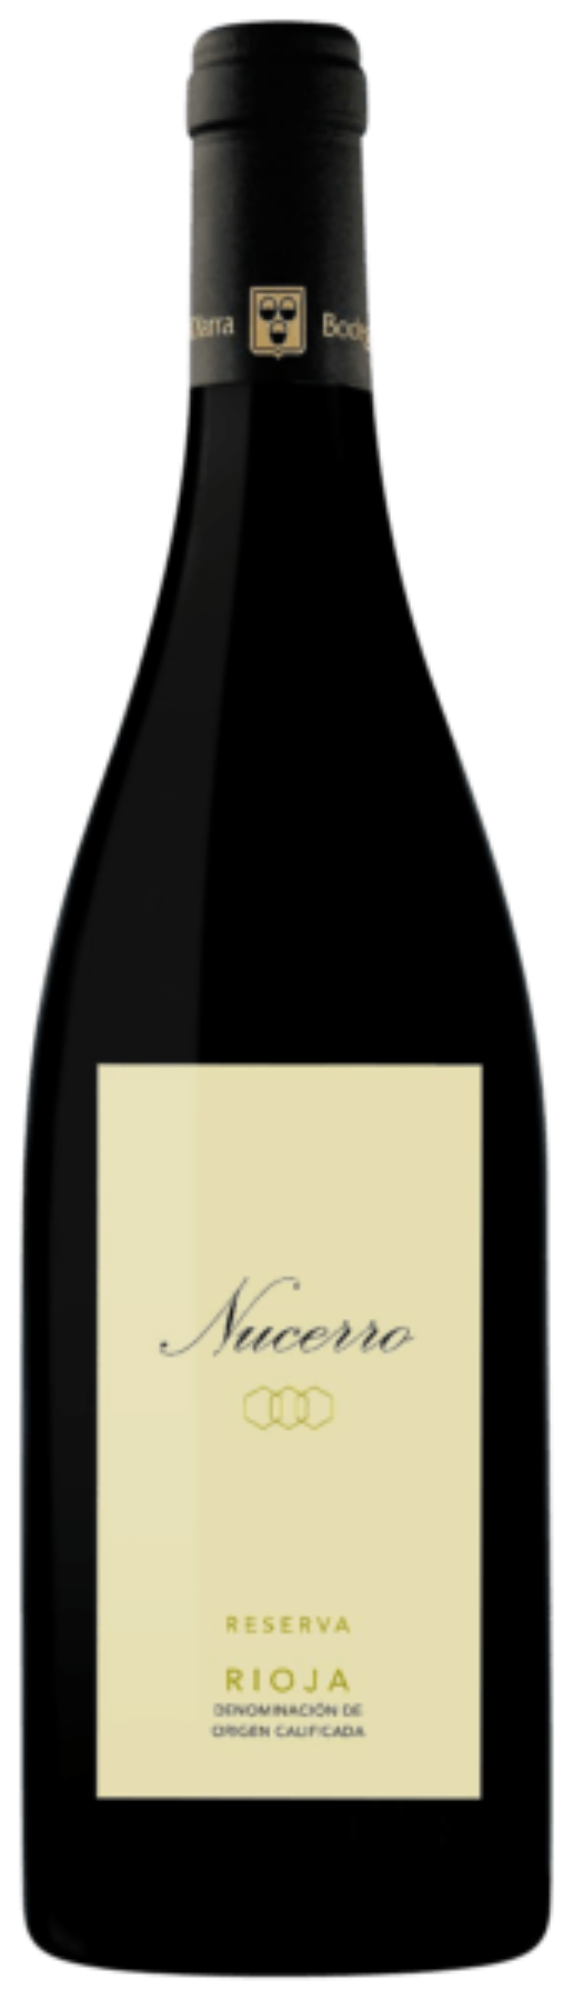 Nucerro Rioja Reserva 2018